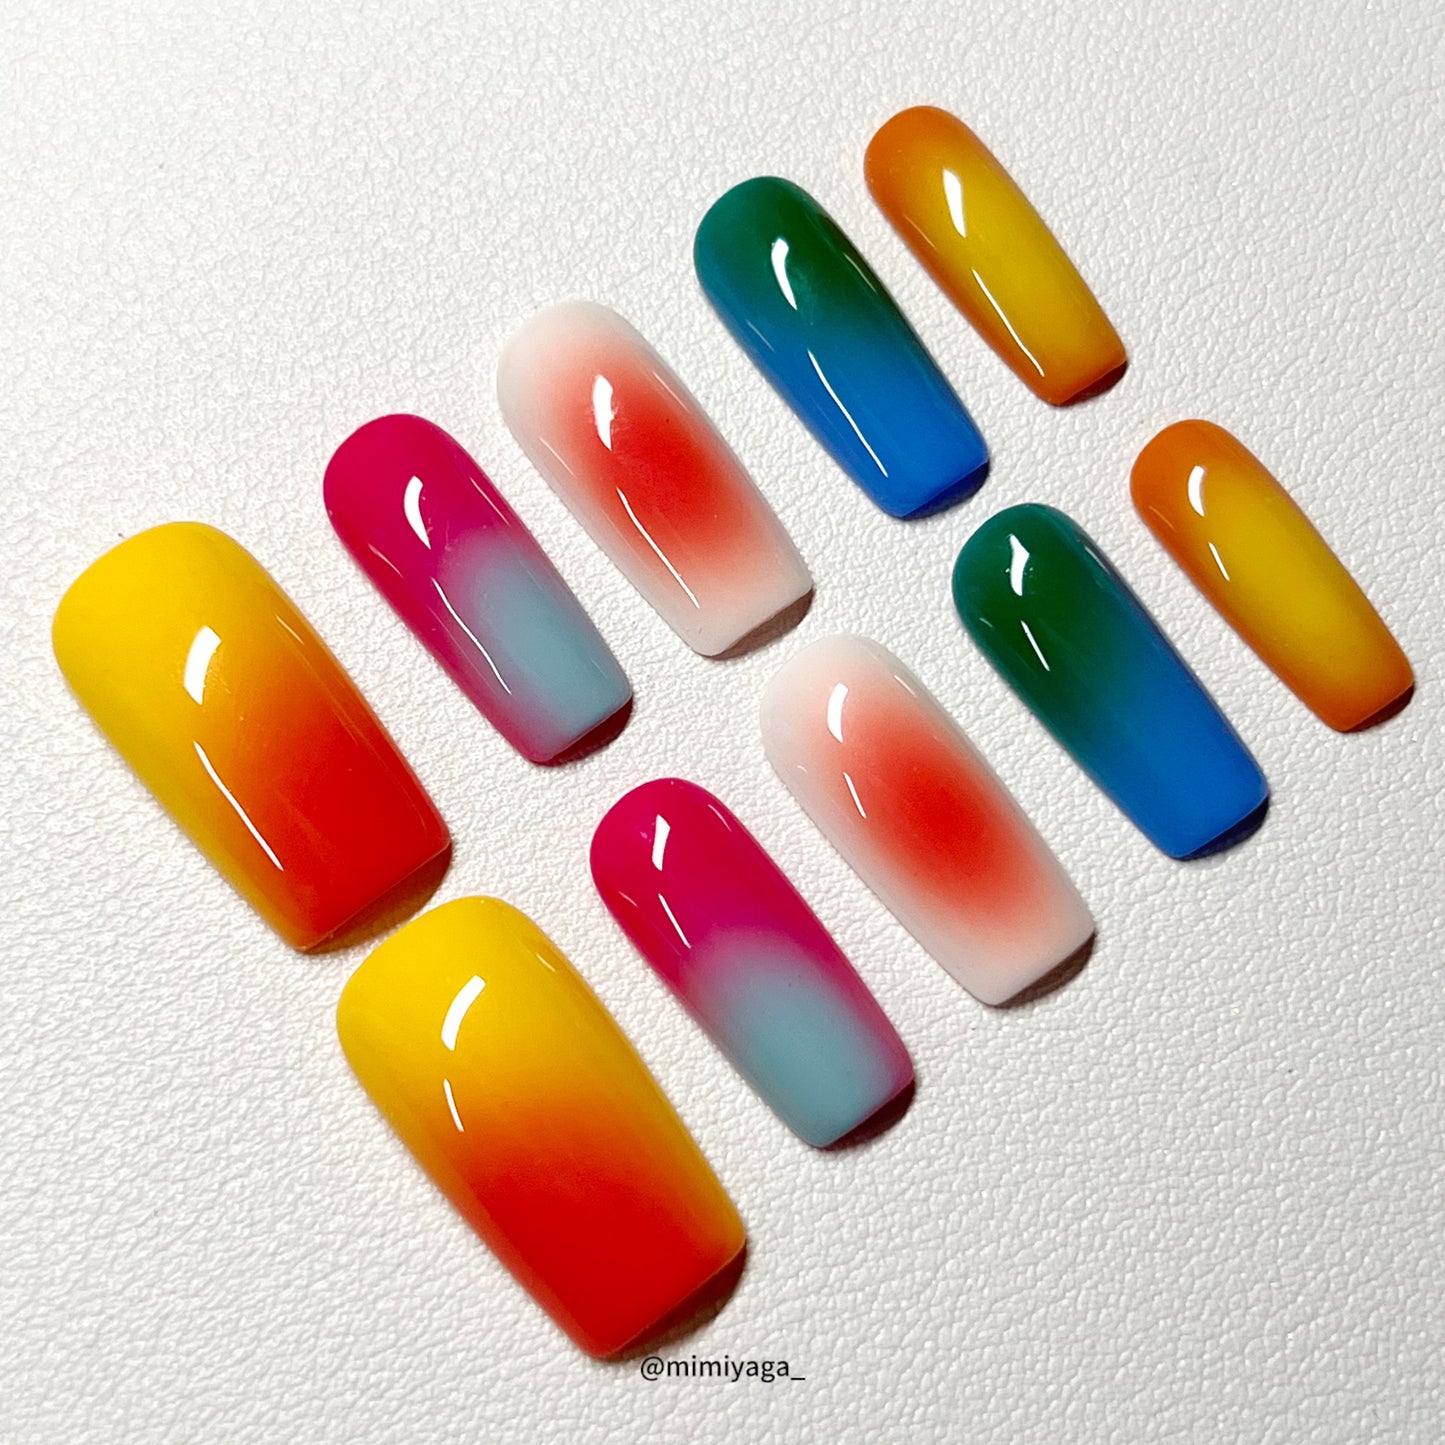 93 Rainbow candy dopamine